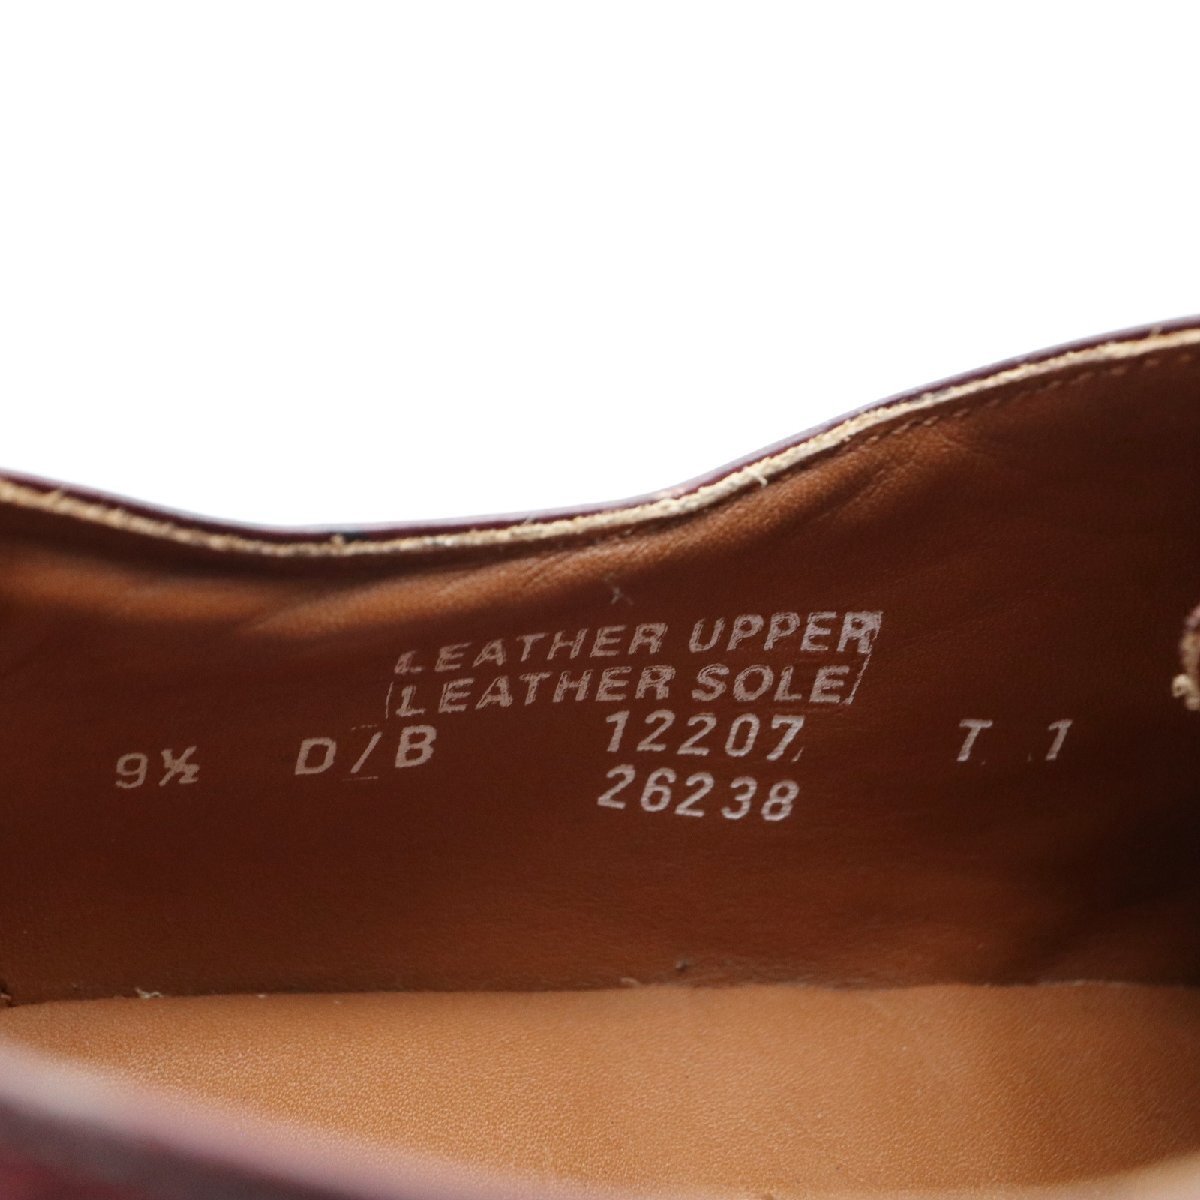 USA製 BOSTONIAN 内羽根式 ウィングチップ 本革 レザー 革靴 レザーシューズ ( メンズ 9 1/2 DB ≒ 27.5cm ) KA0070 1円スタートの画像9